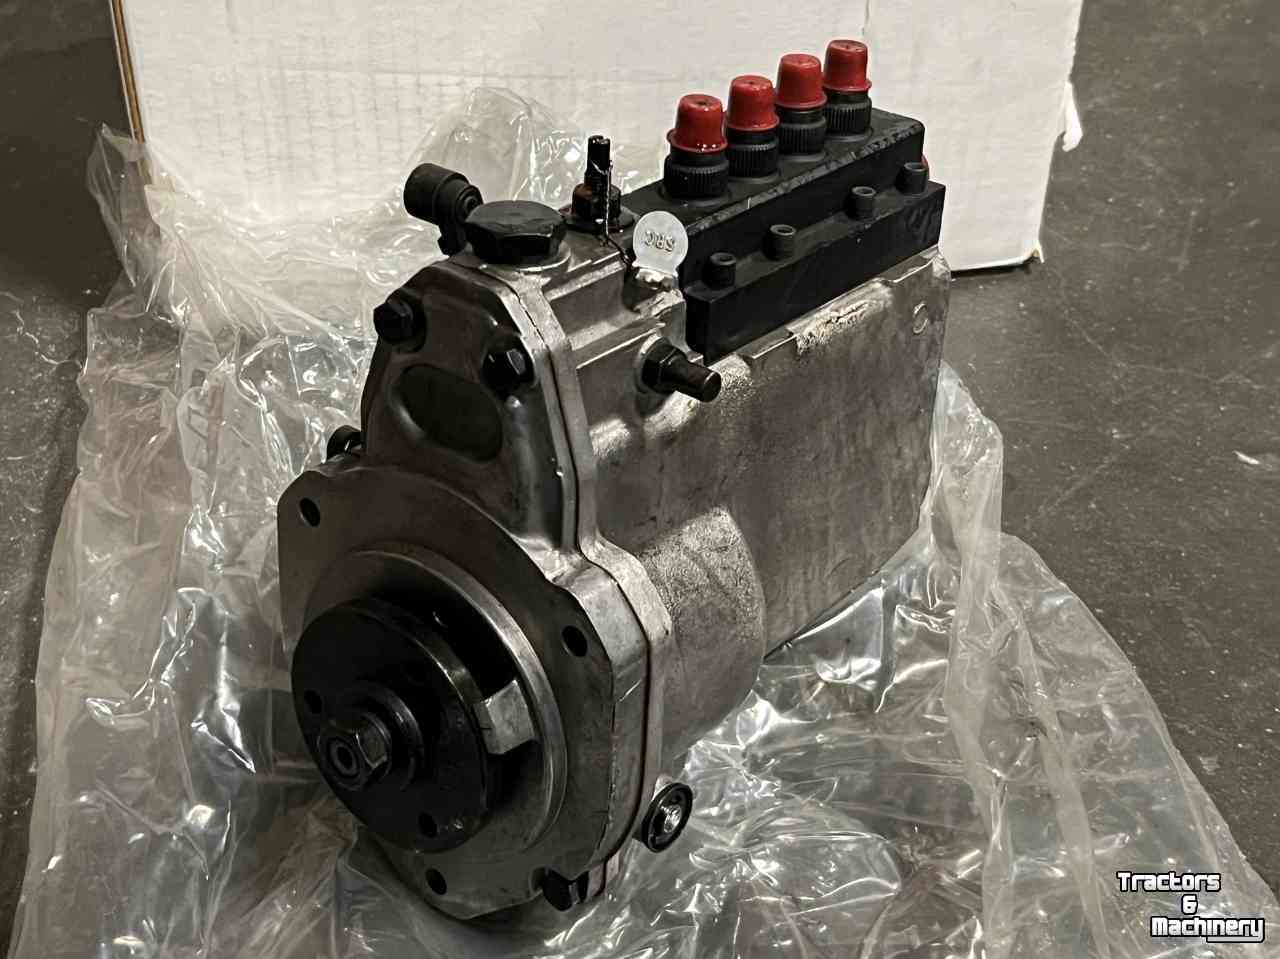 Engine Ford Brandstofpomp MINIMEC - 4 cilinder lijn, FORD 5610, 6610, 6710, 7610, 7710, 7610O, 7710O, BSD motoren